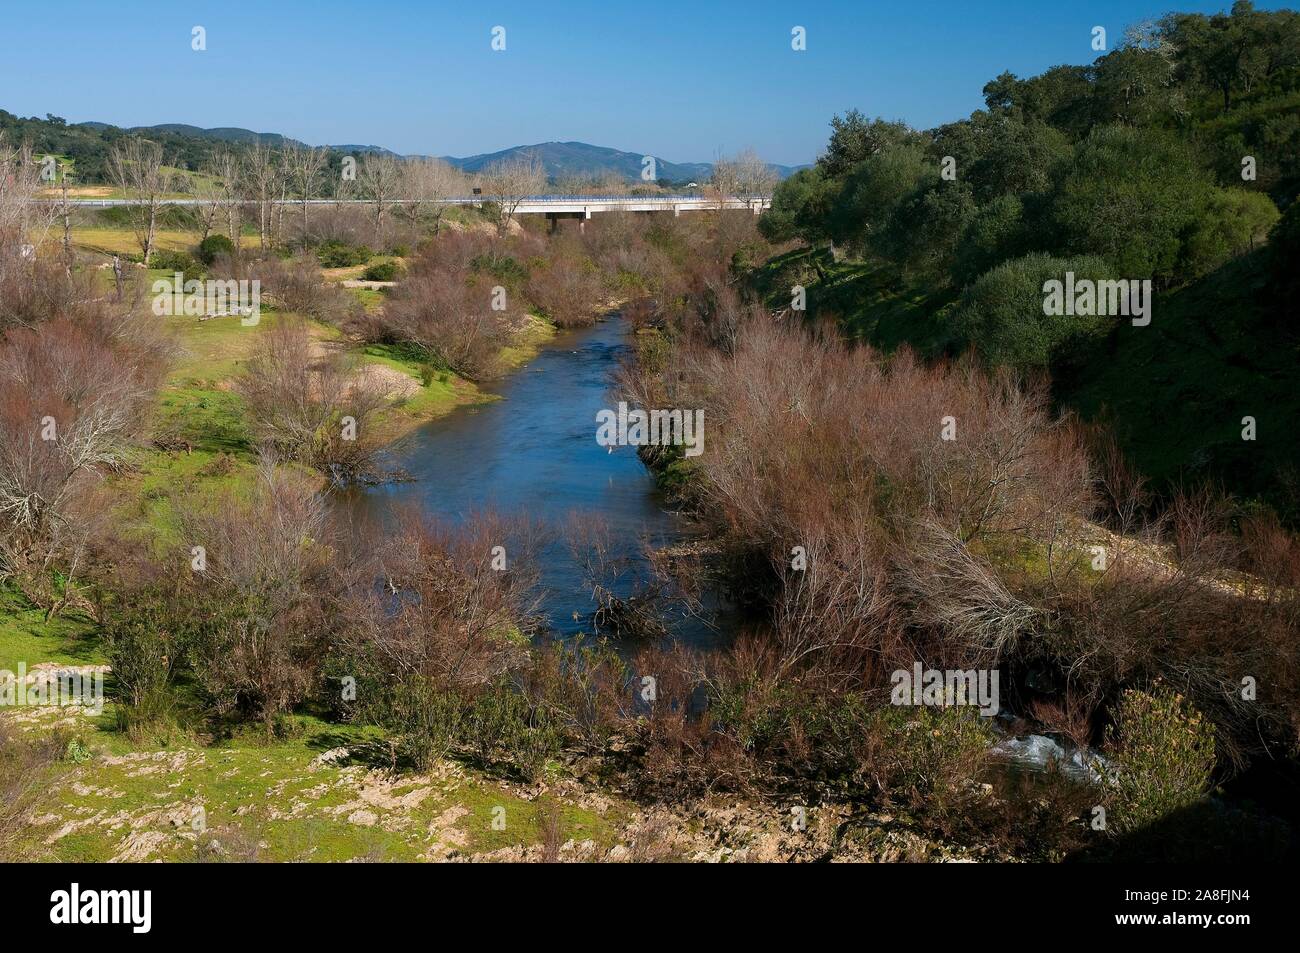 Chanza River, Water, Rosal de la frontera, Huelva province, Region of Andalusia, Spain, Europe. Stock Photo